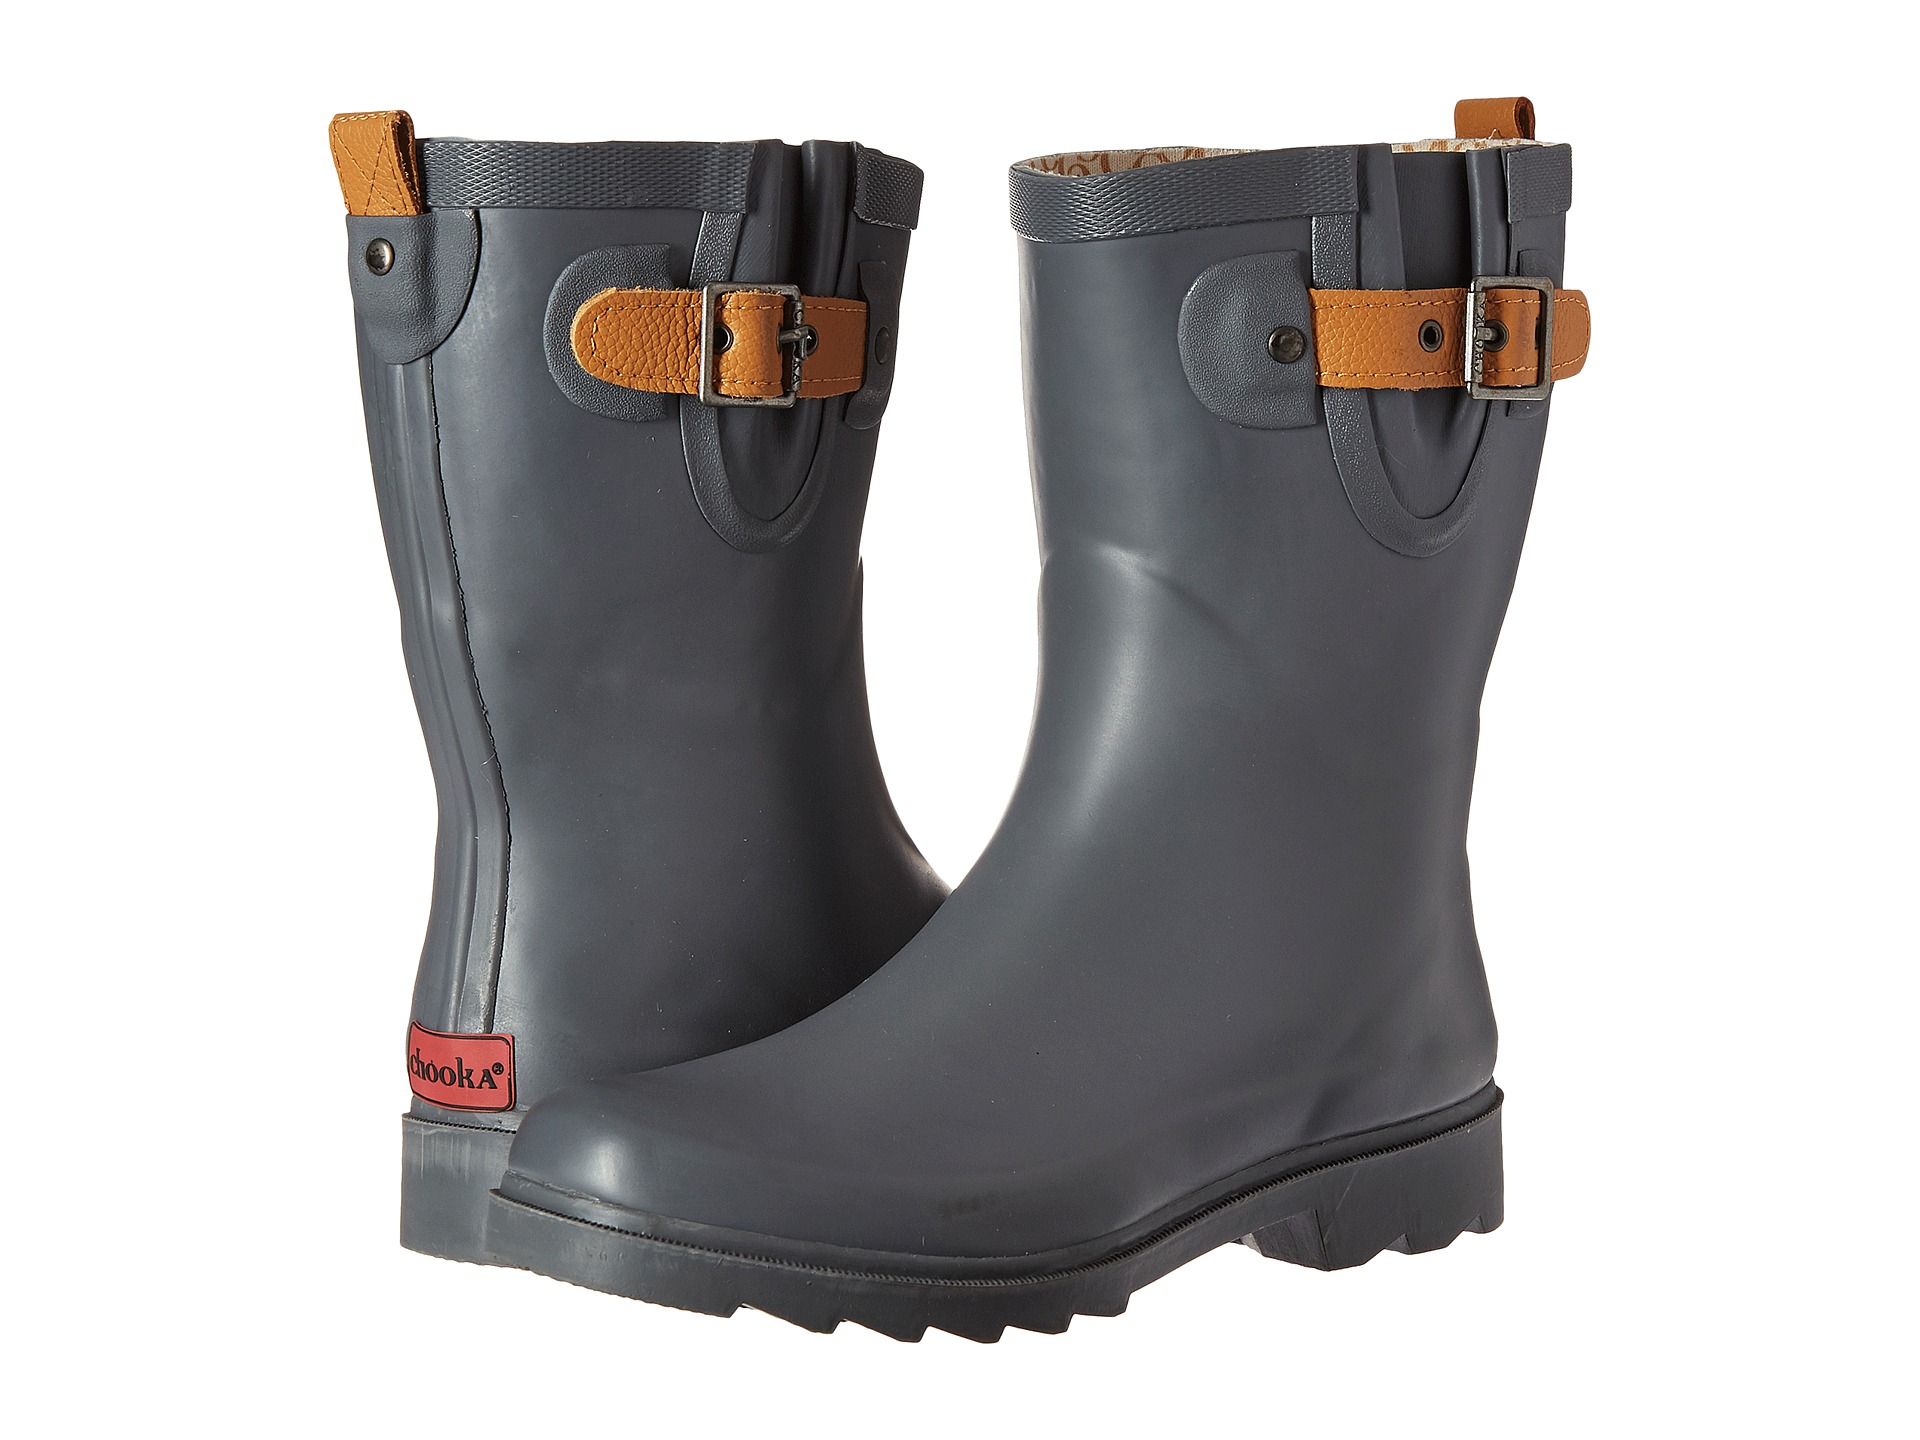 Top Rain Boots Brands - Yu Boots